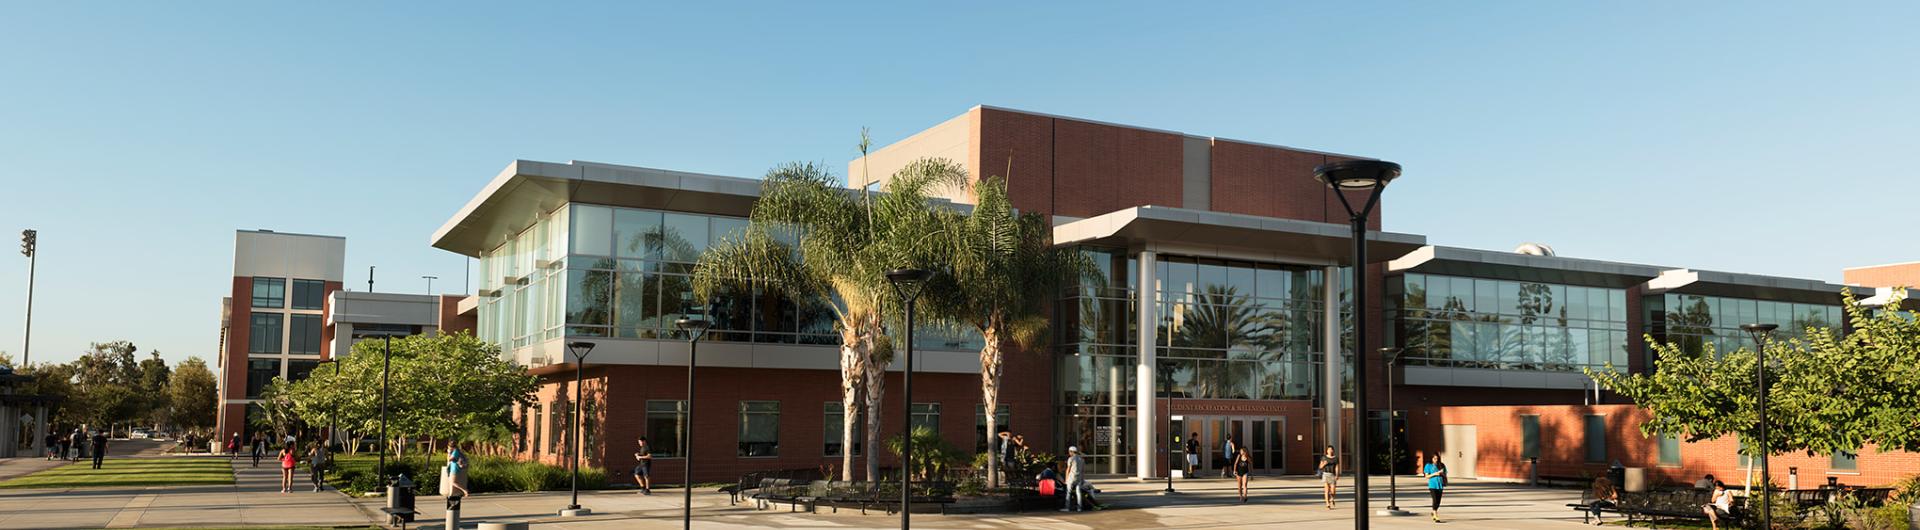 The Student Recreation & Wellness Center, an energy efficient building